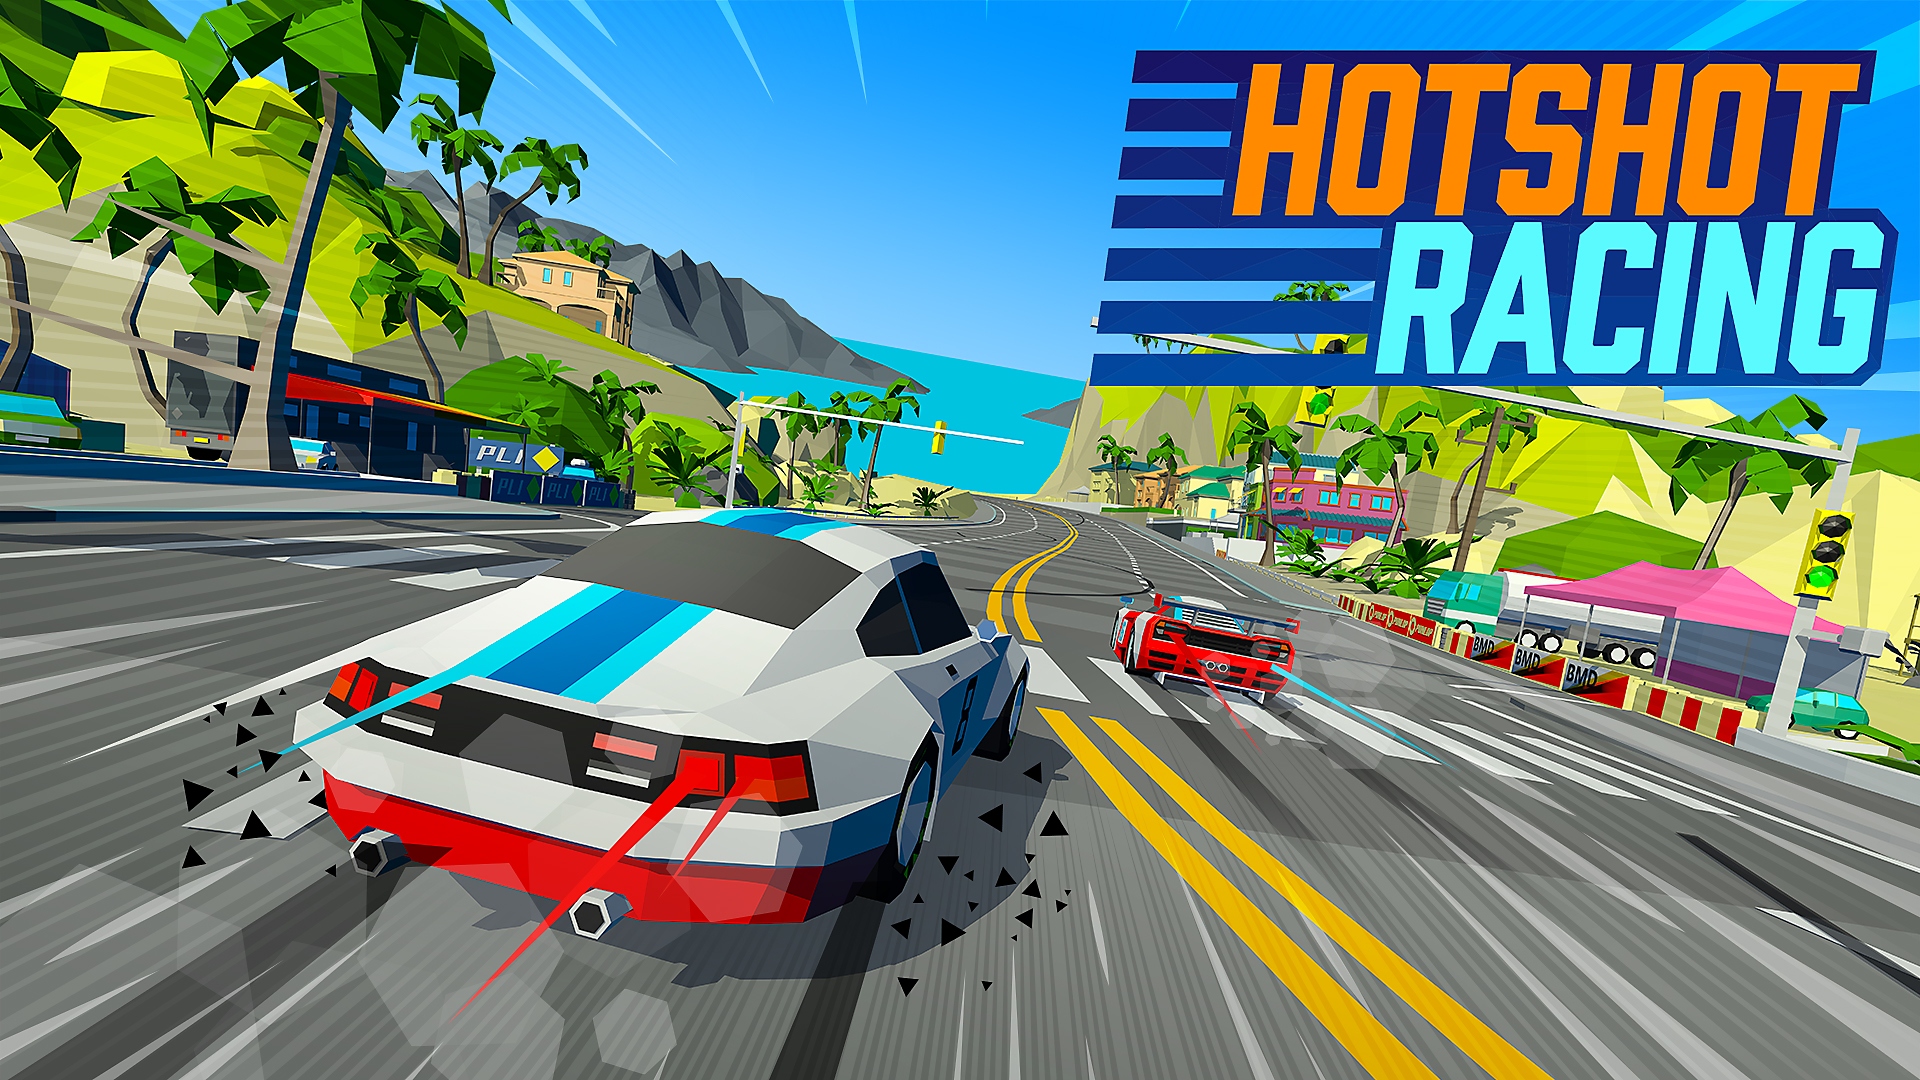 Hotshot Racing – ролик за датою виходу | PS4